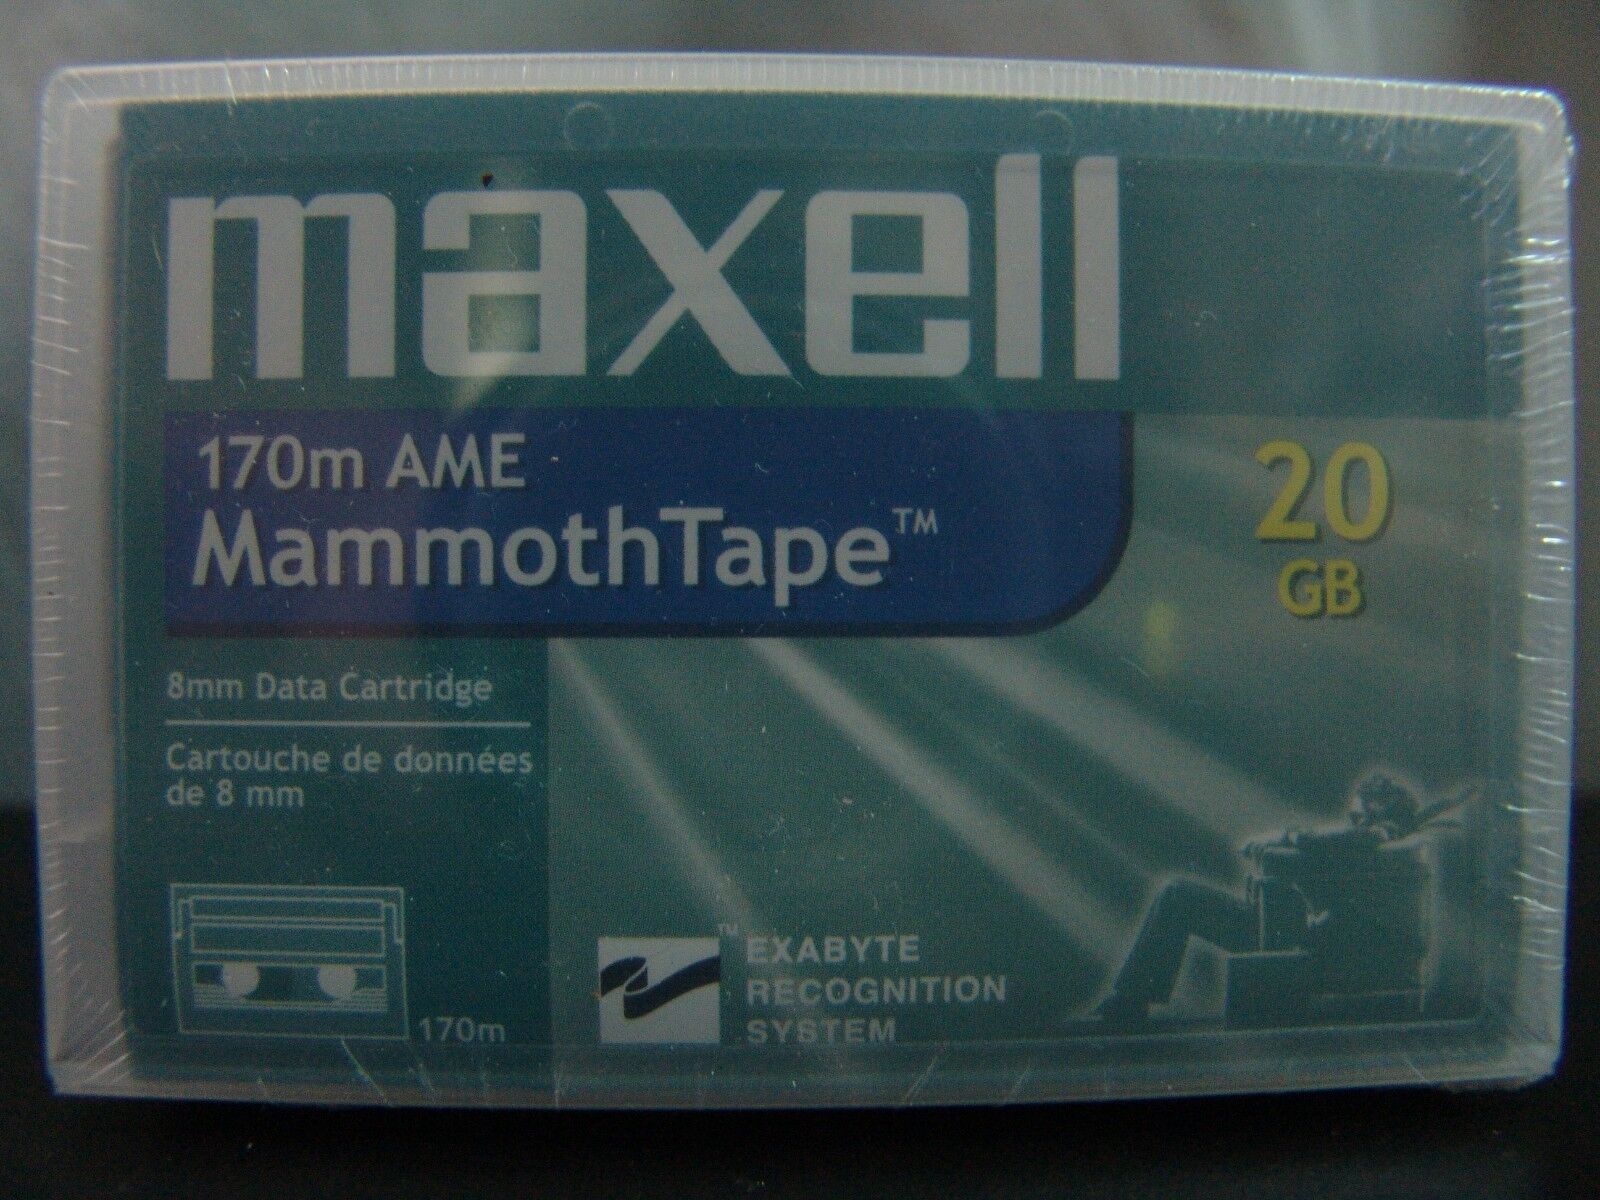 17 MAXELL 170m AME MammothTape 8mm 20GB Data Cartridge Exabyte Technology NEW